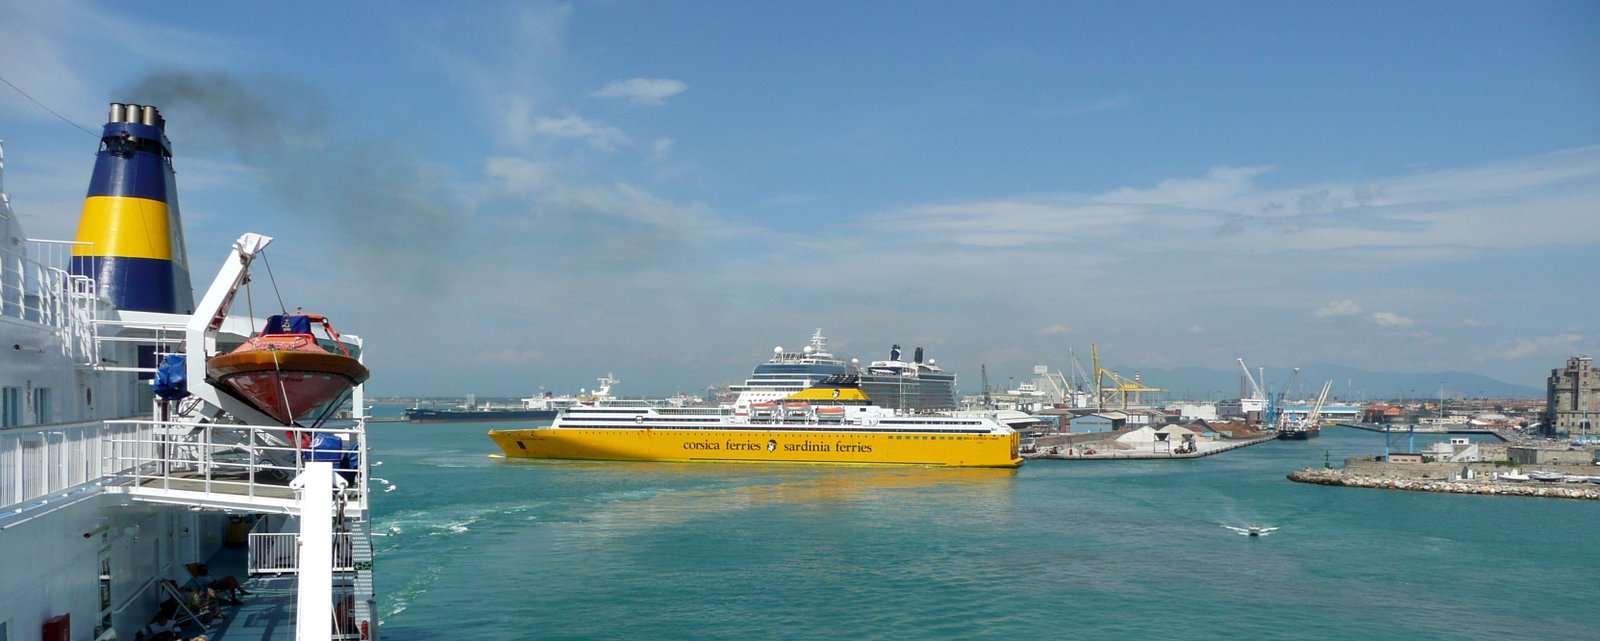 Le Mega Express Three manoeuvrant dans le port de Livorno, vu du Mega Smeralda, en août 2014 ; photo : Romain Roussel